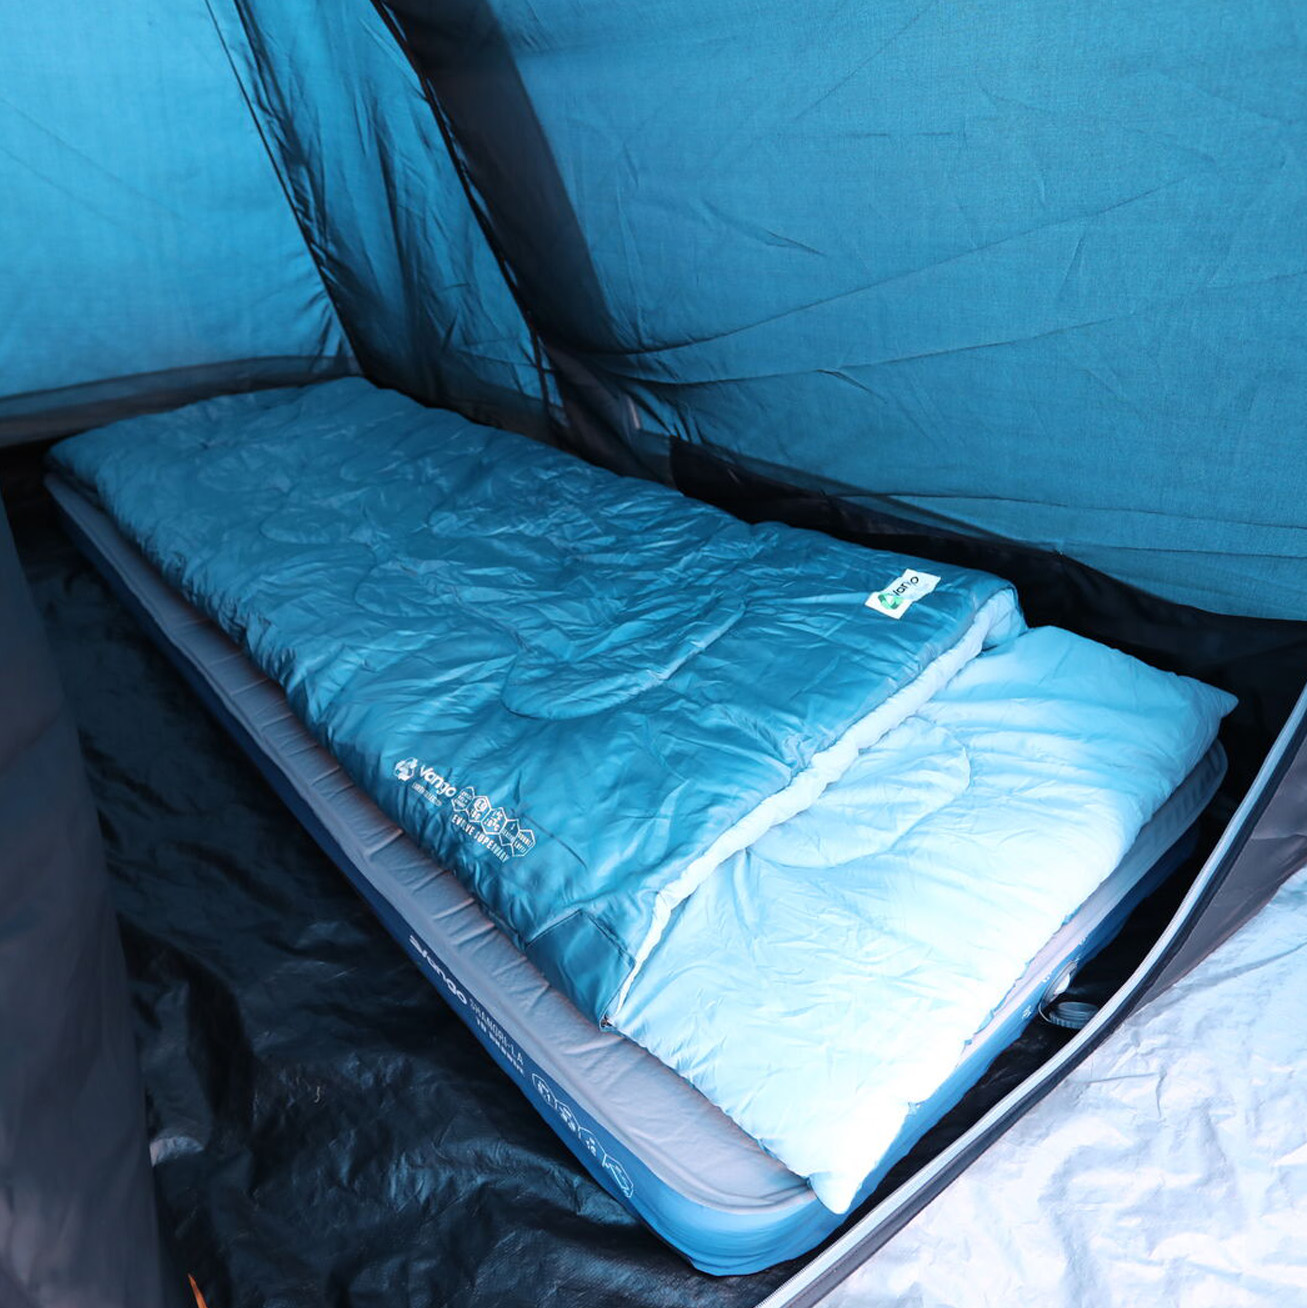 Vango Evolve Superwarm Single Camping Sleeping Bag